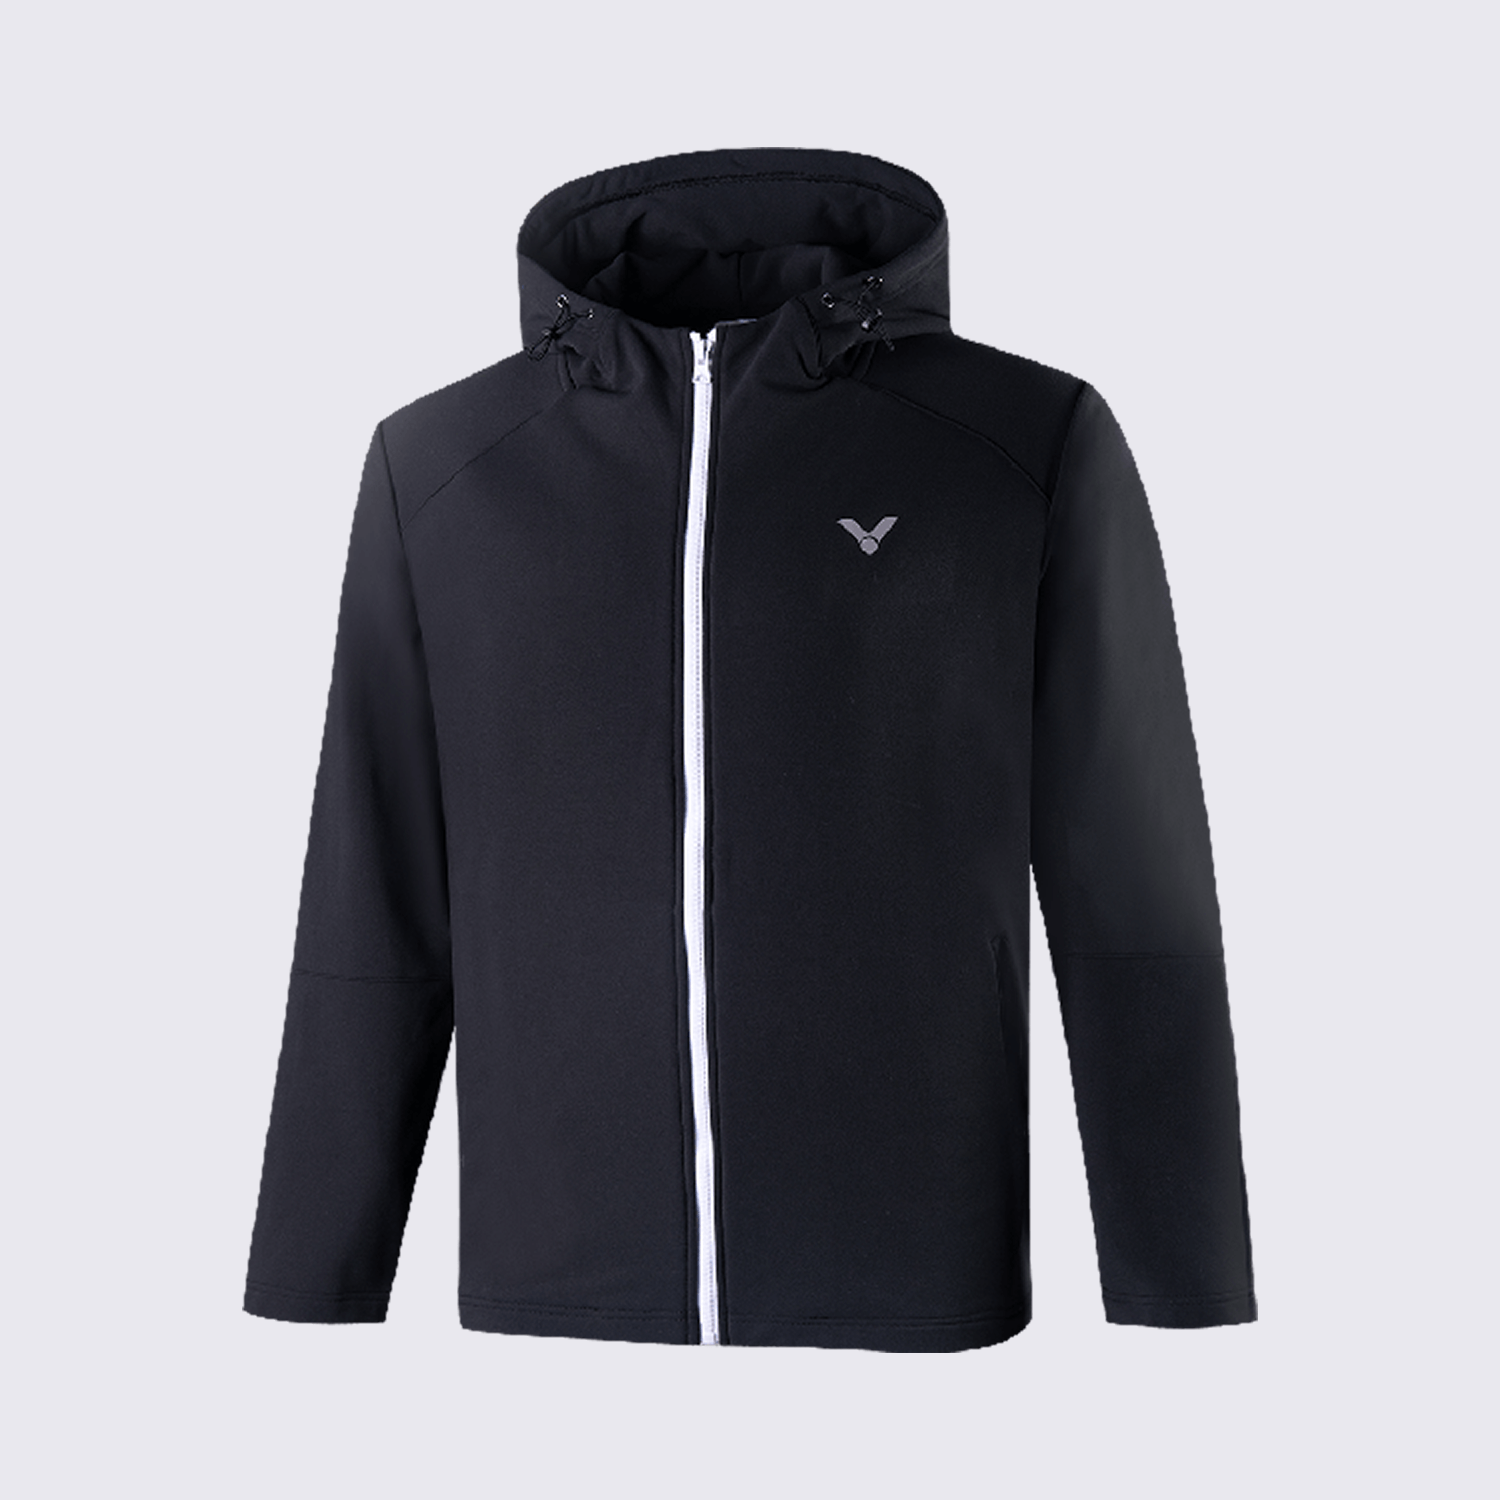 Victor Sports Jacket J-25604 C (Black)